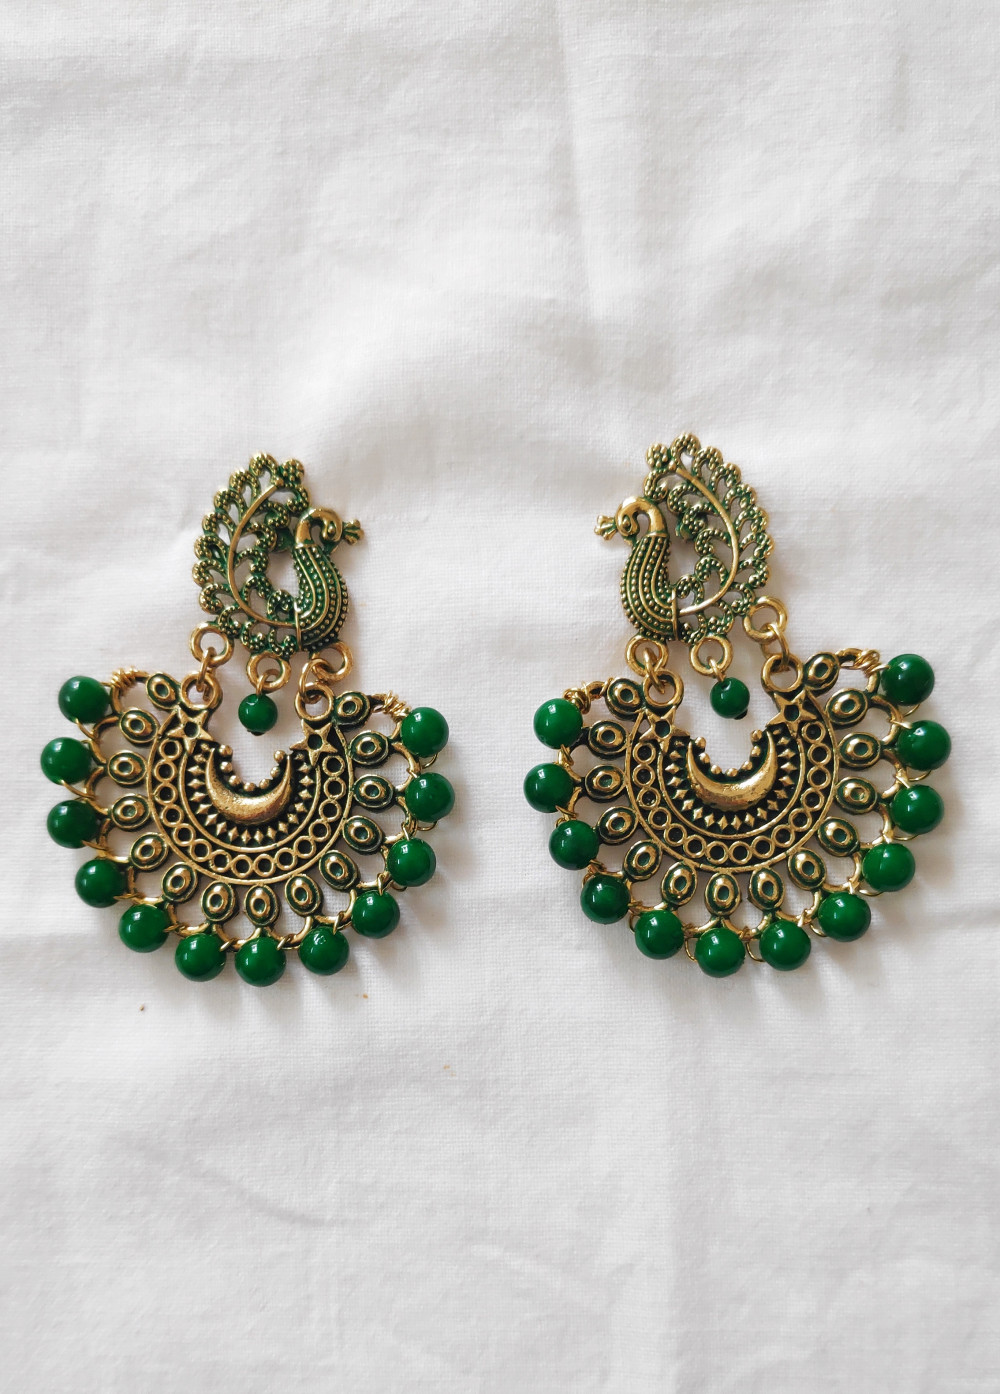 Oxidized Silver Plated Handmade Peacock pearl Jhumka Earrings Jhumki women  #whit | eBay